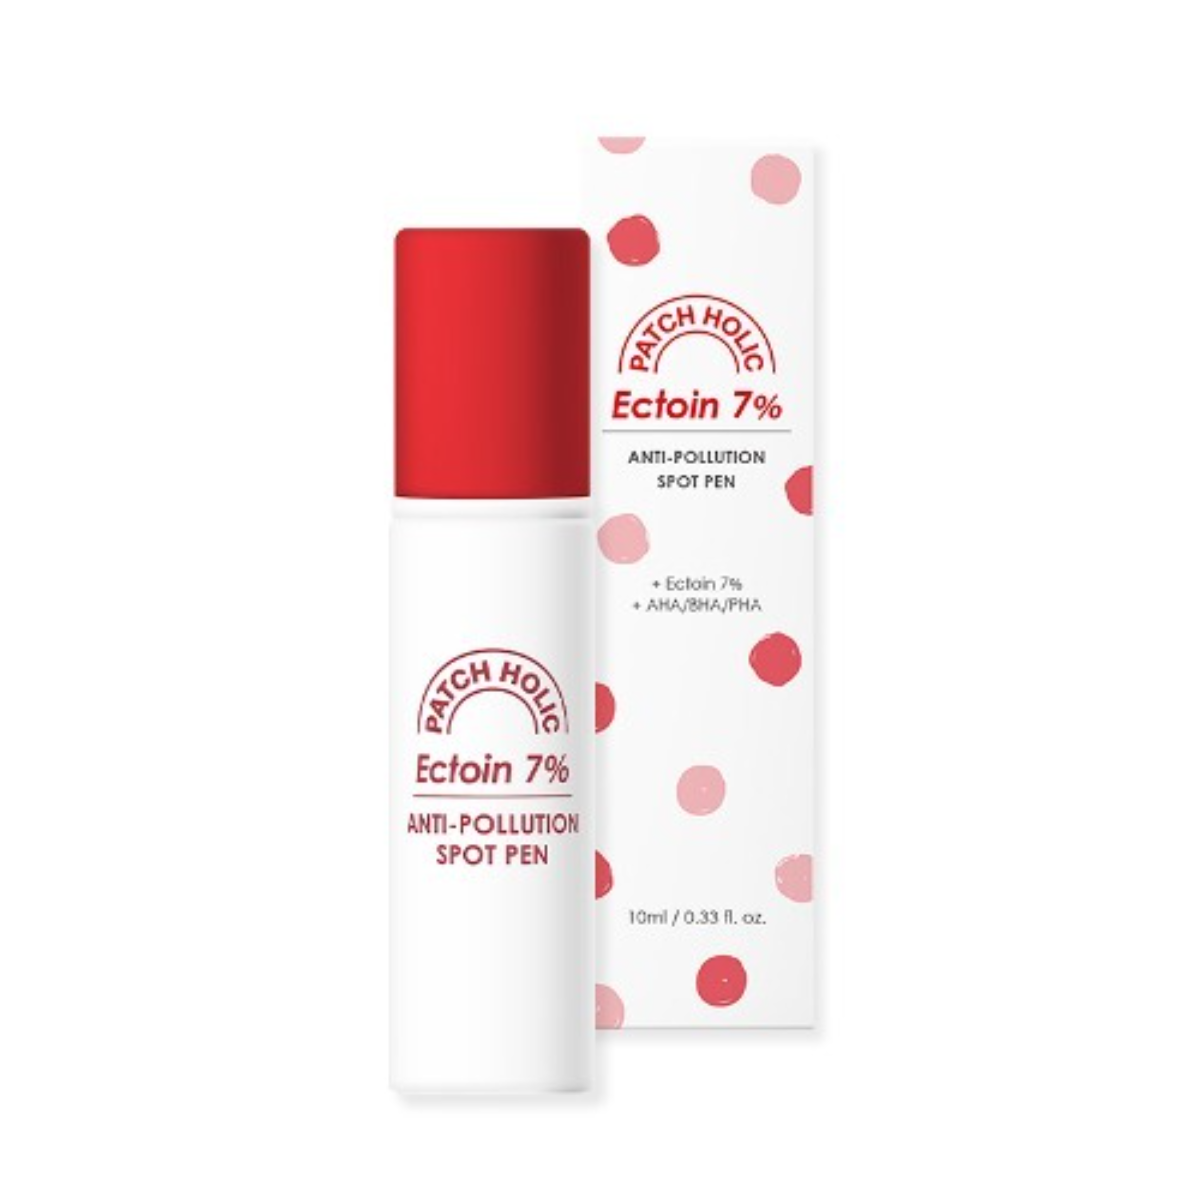 Crema Facial Patch Holic Anti Polution Ectoin 10ml